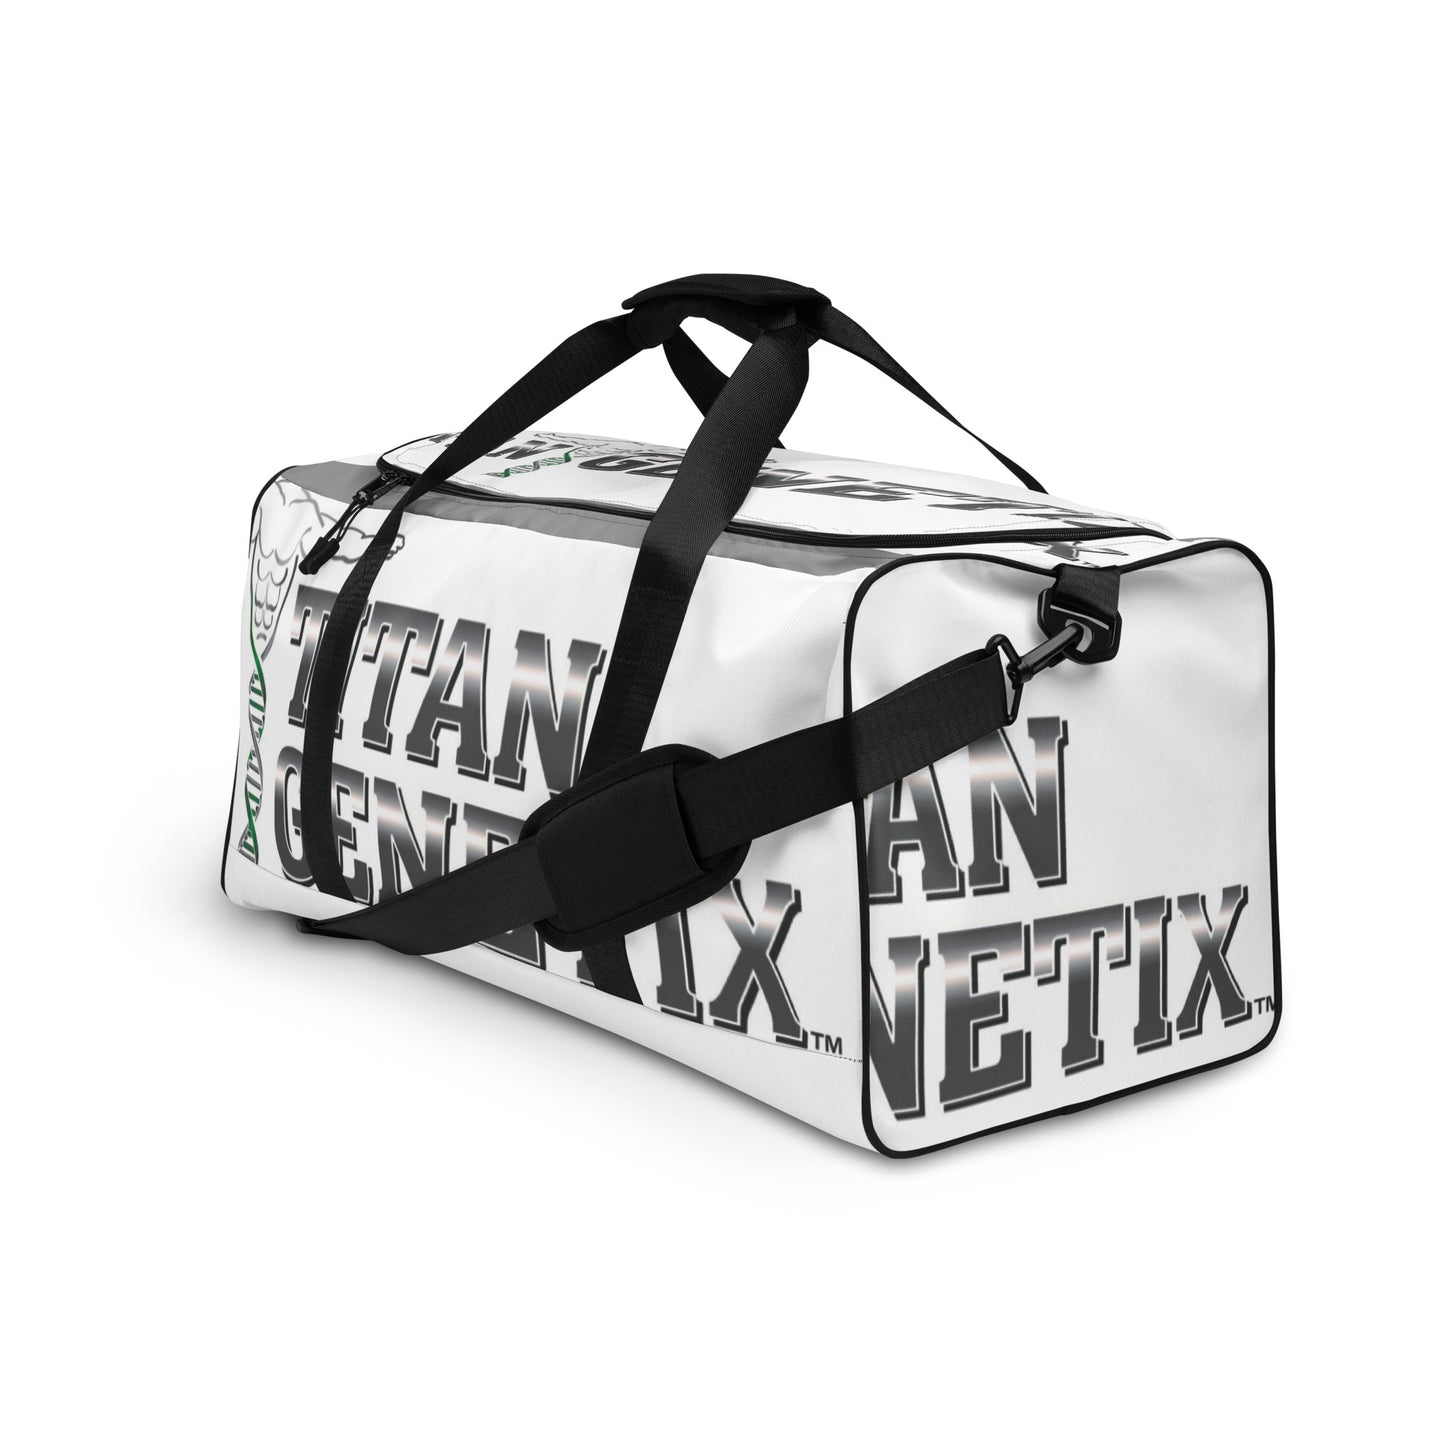 Titan Genetix - Large Duffle Bag